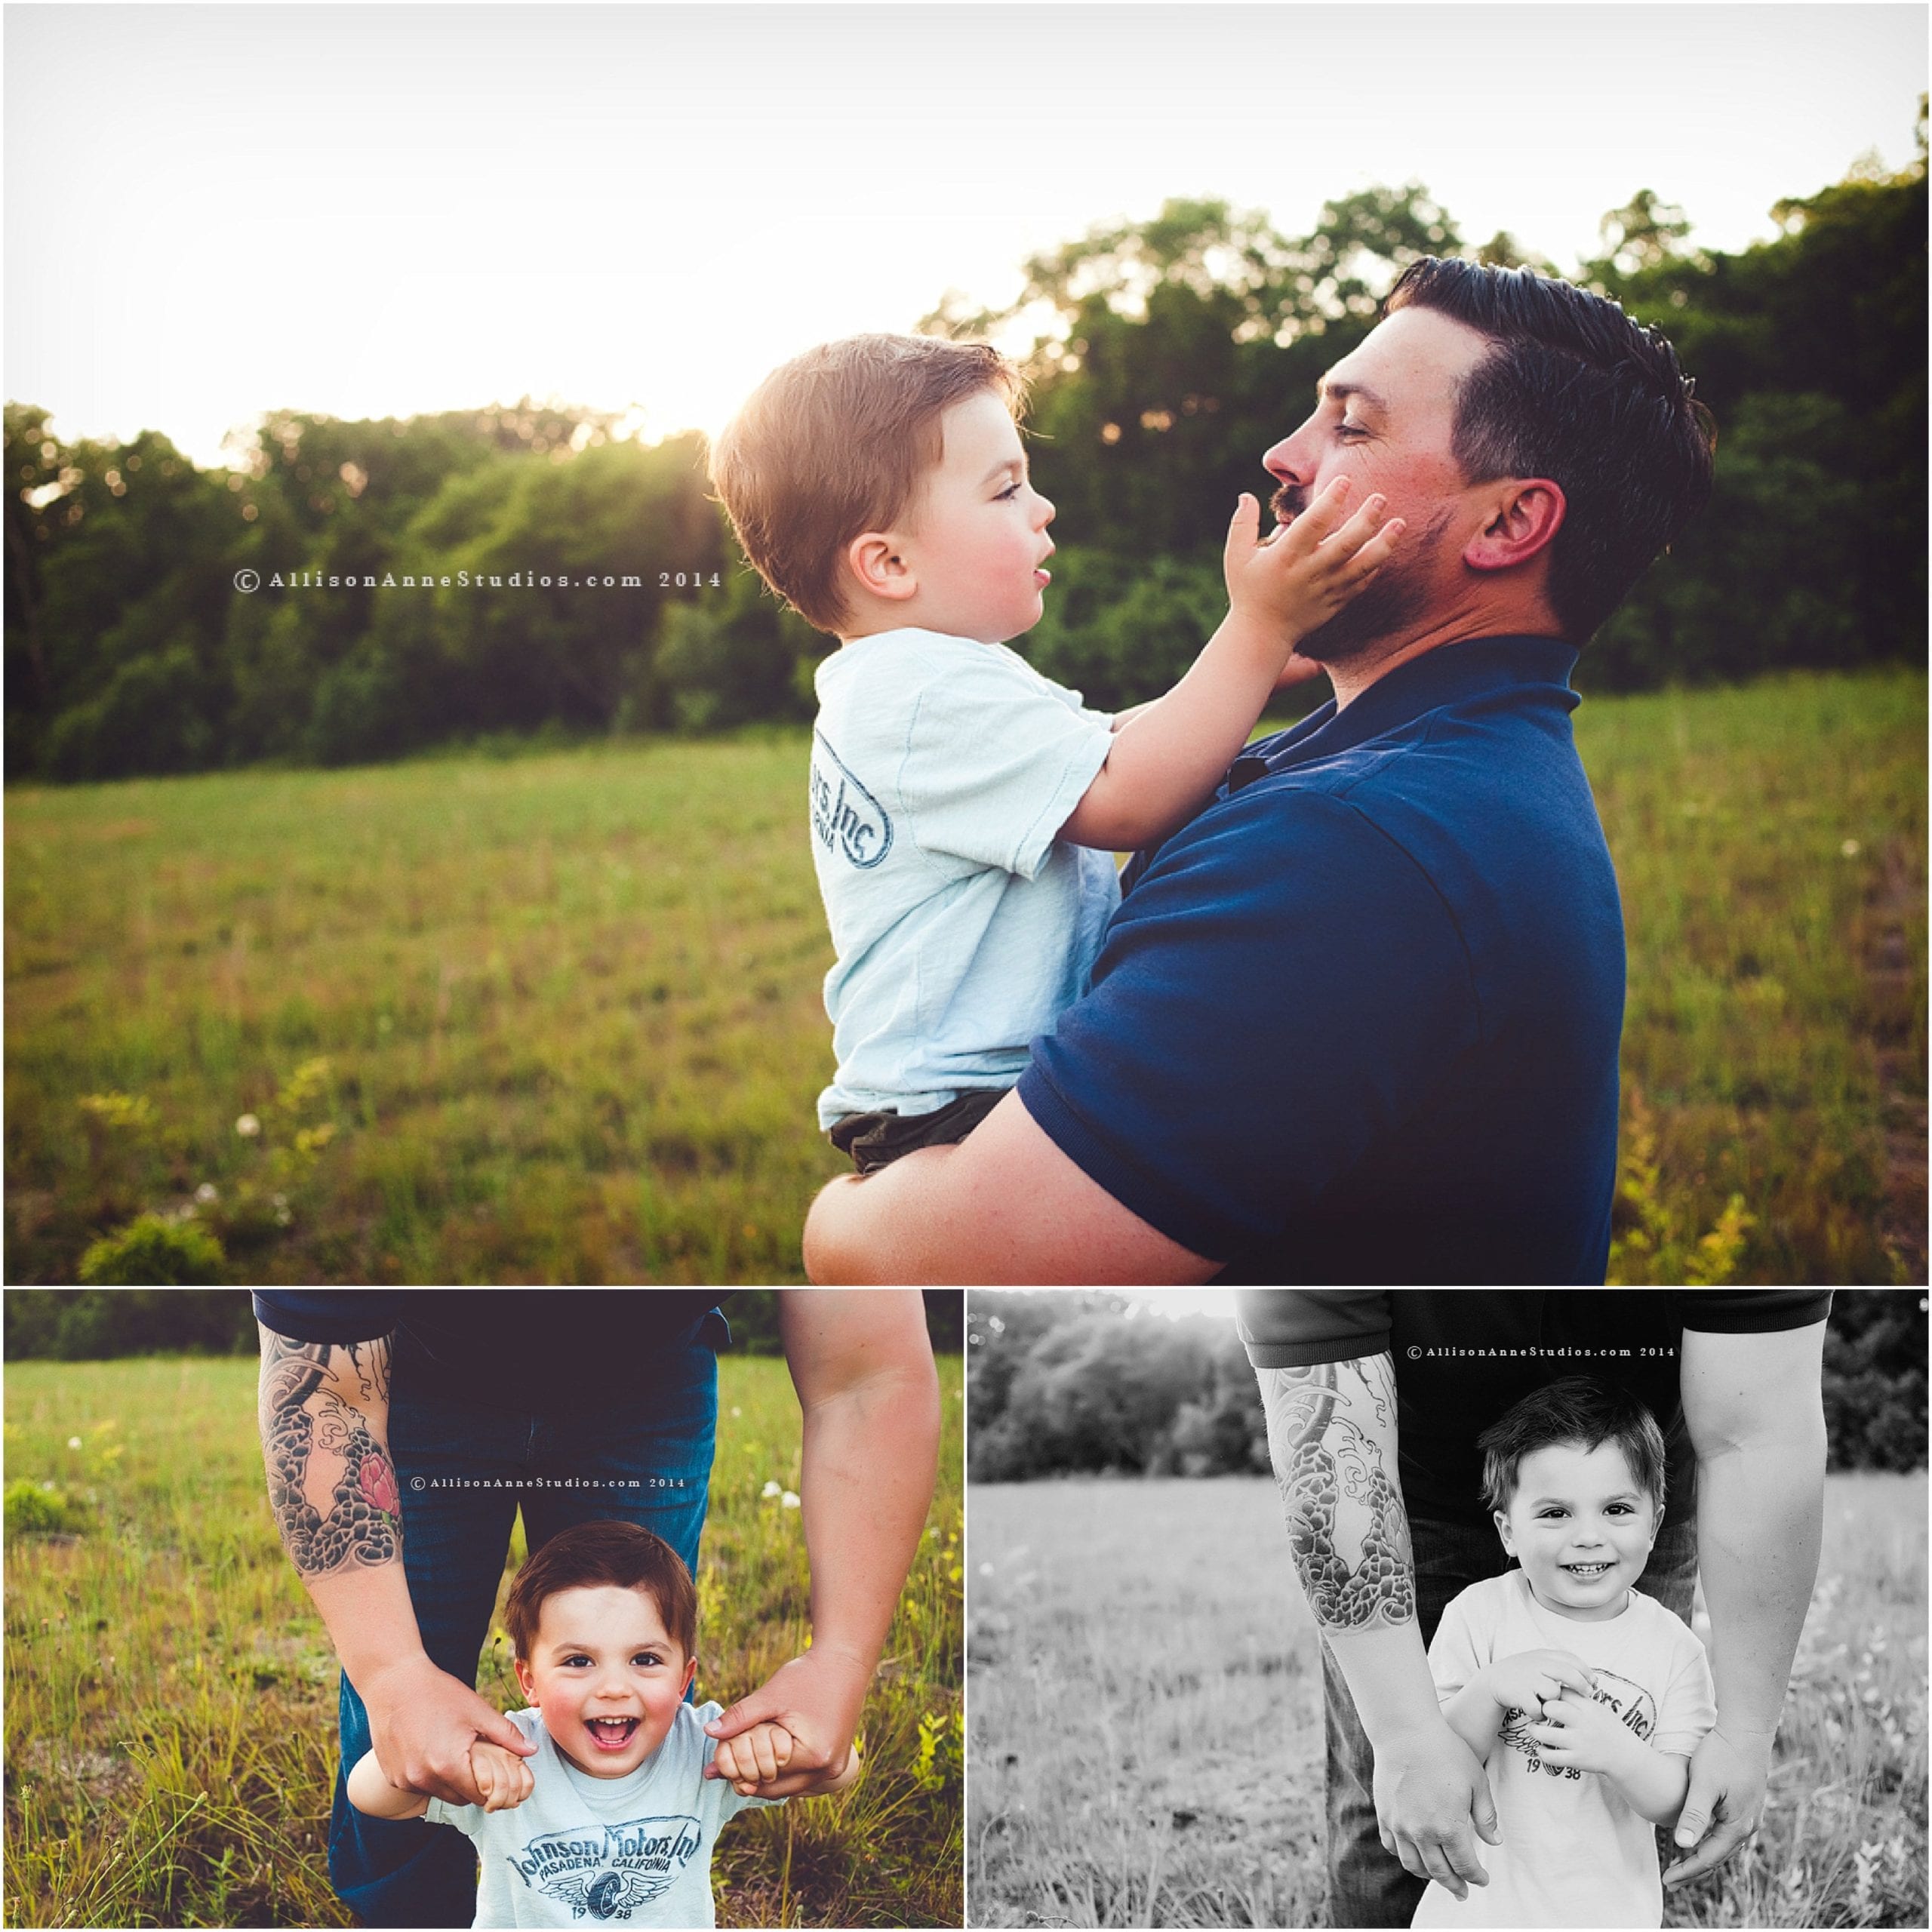 Daddy, Father, AllisonAnne Studios, LucidFoto, Hammonton Portrait Photographer, Family Pictures, South Jersey Photographer, Outdoor Portraits, Kids, Babies